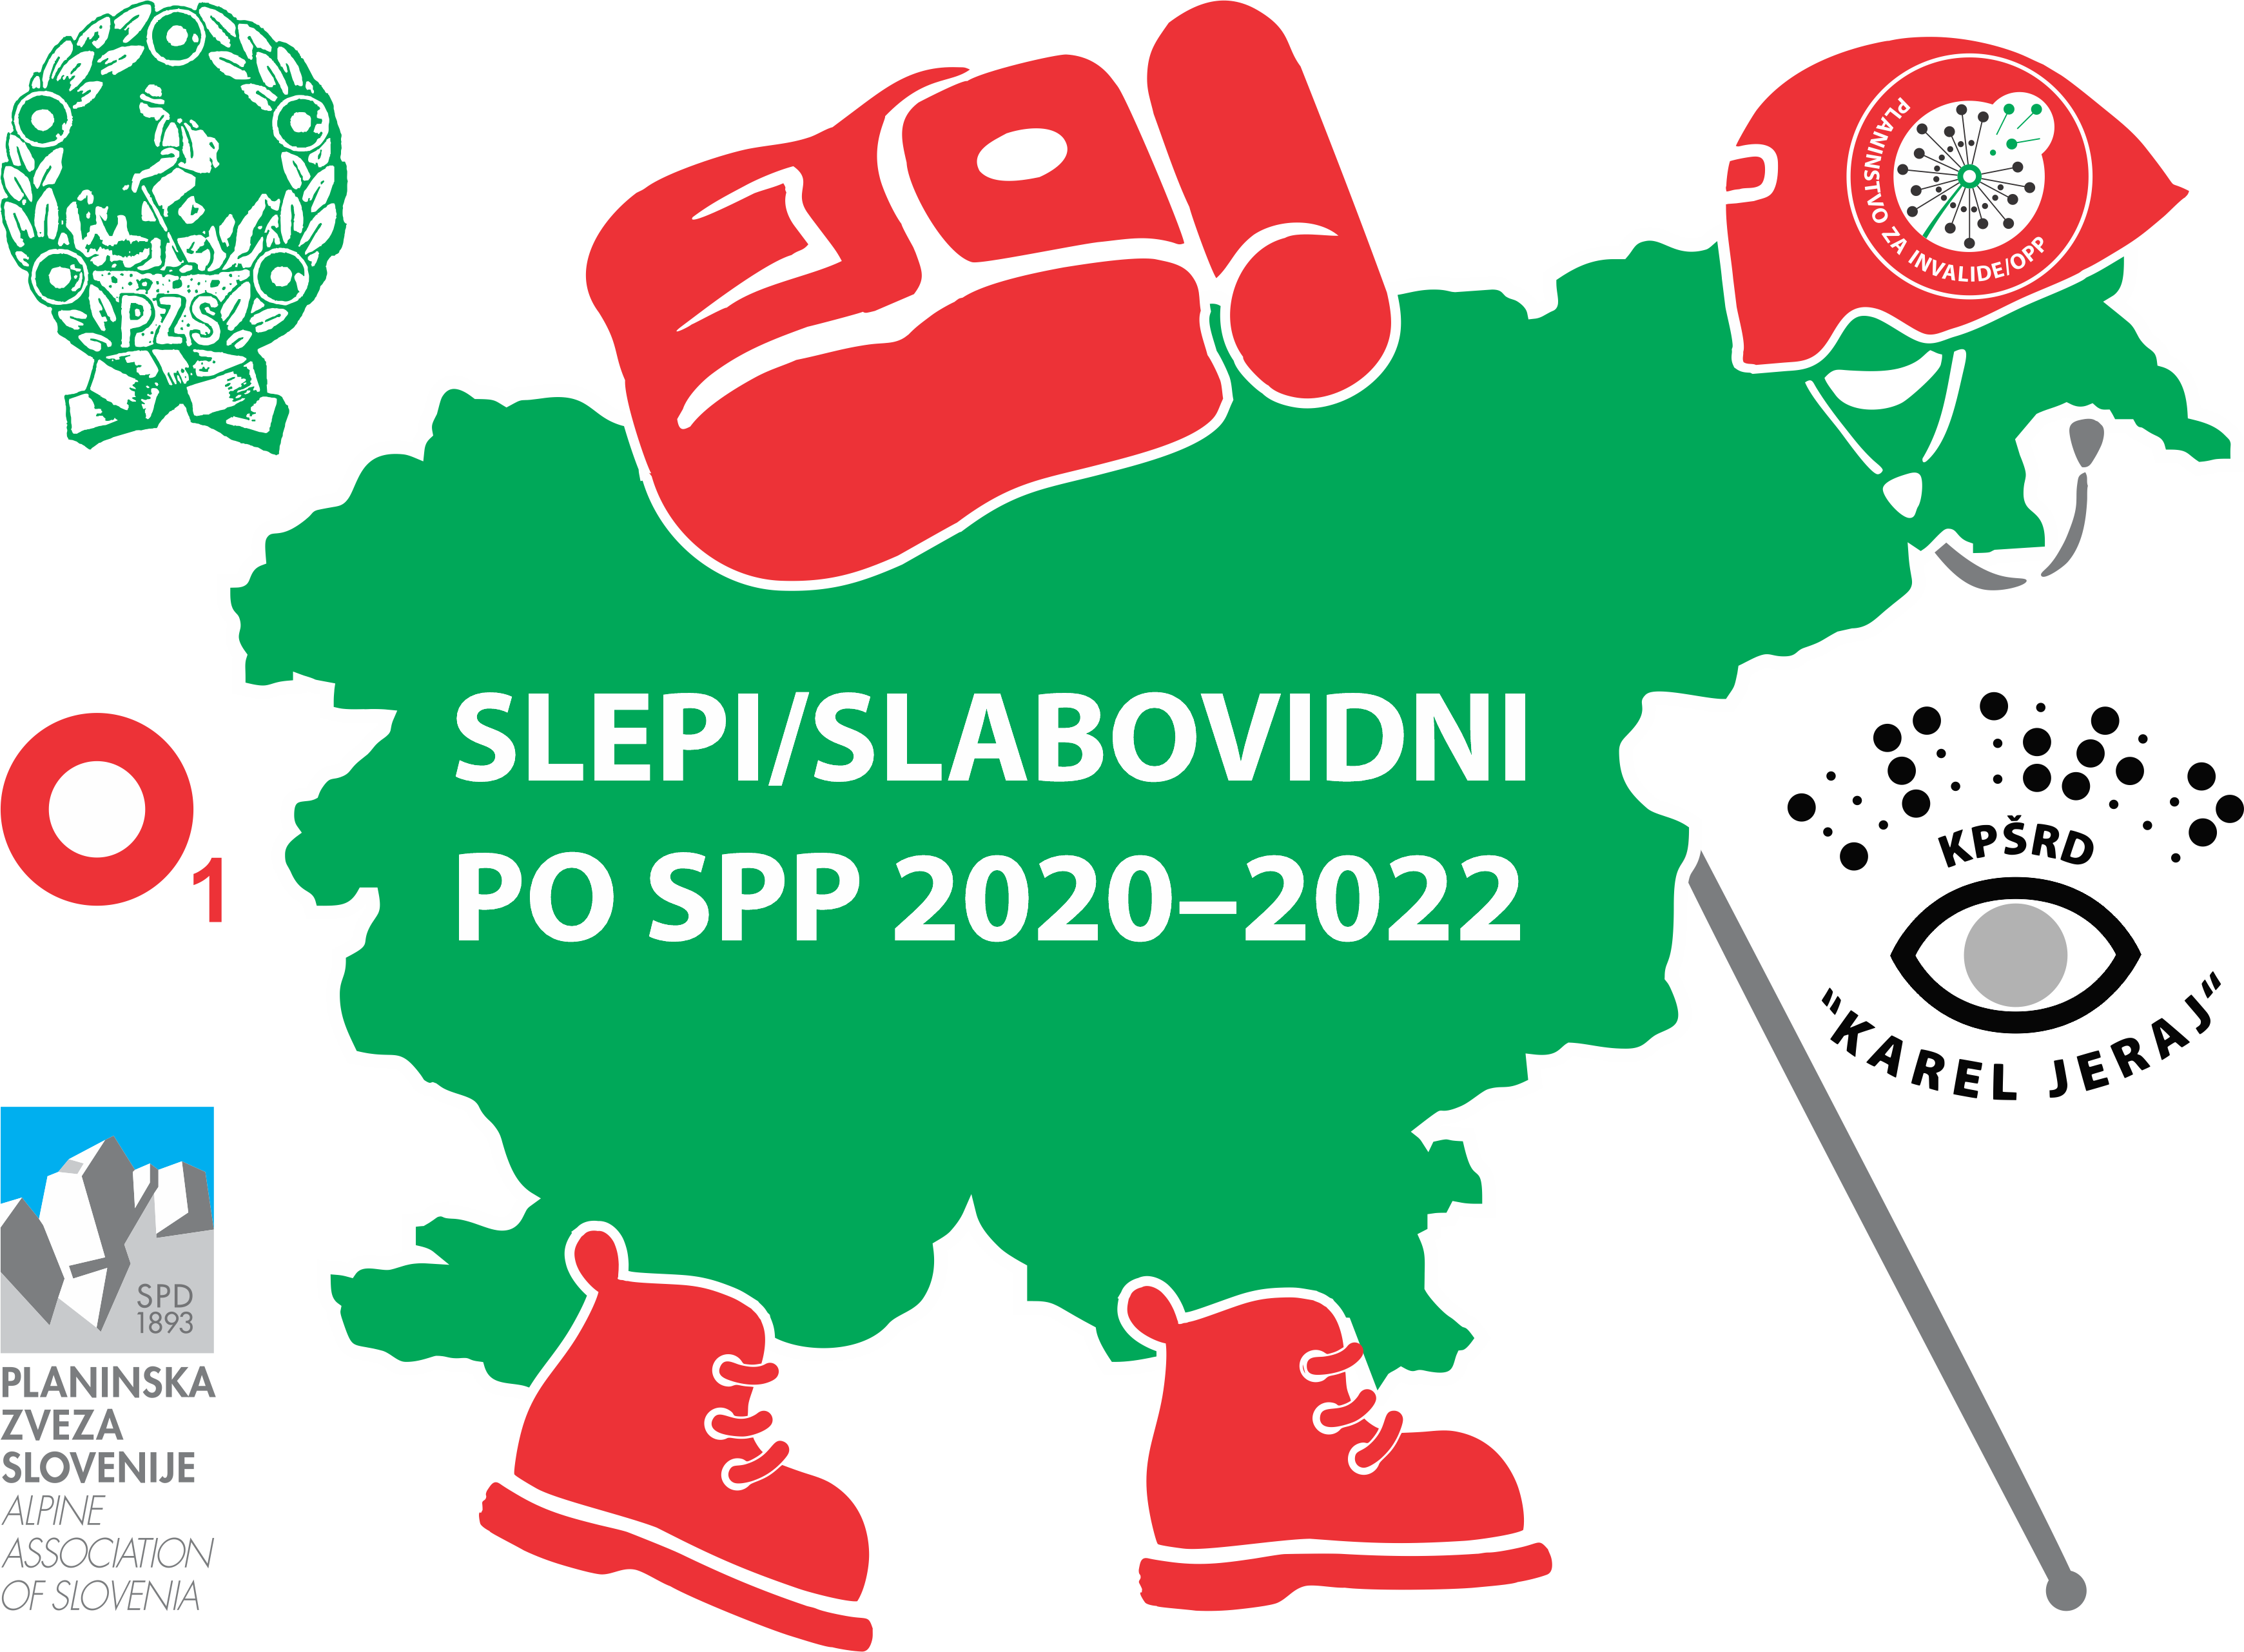 pzs_pin_spp_logo